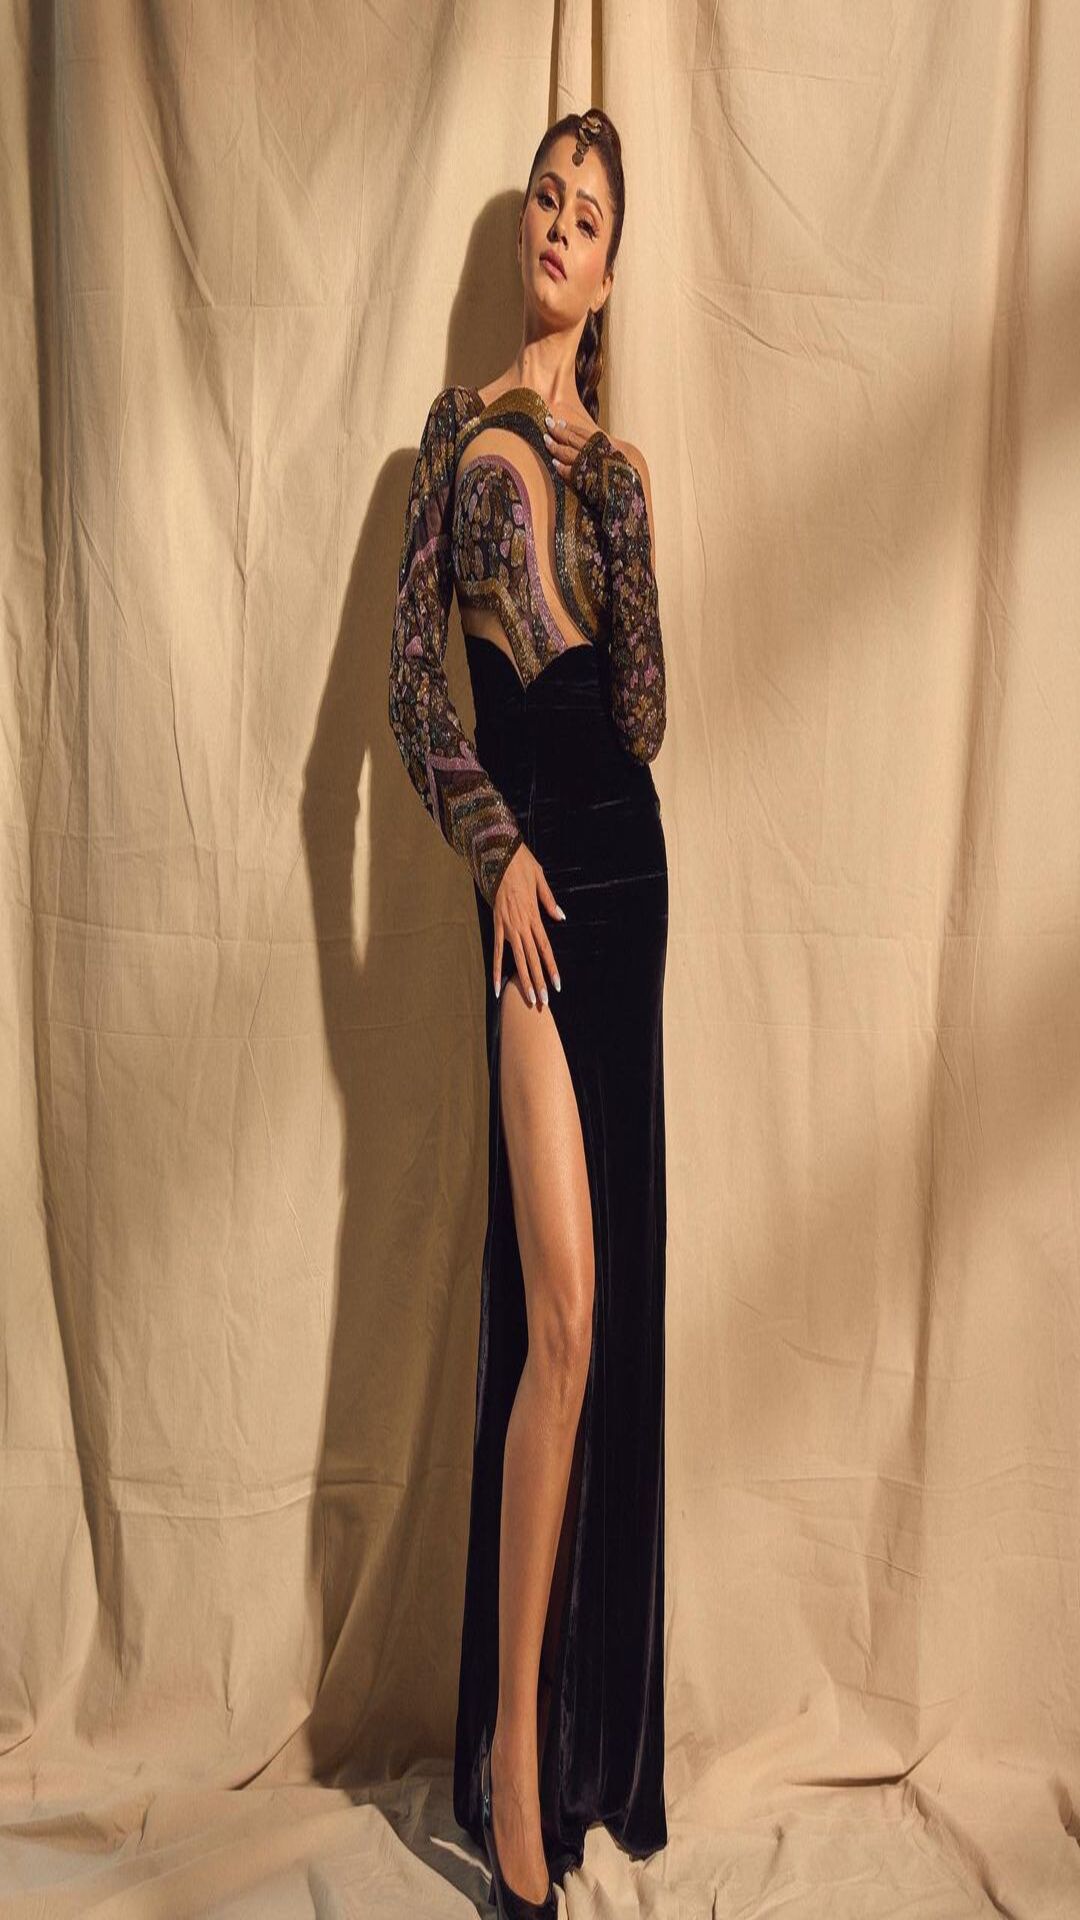 Rubina Dilaik Is Sight To Behold In High-Slit Dress